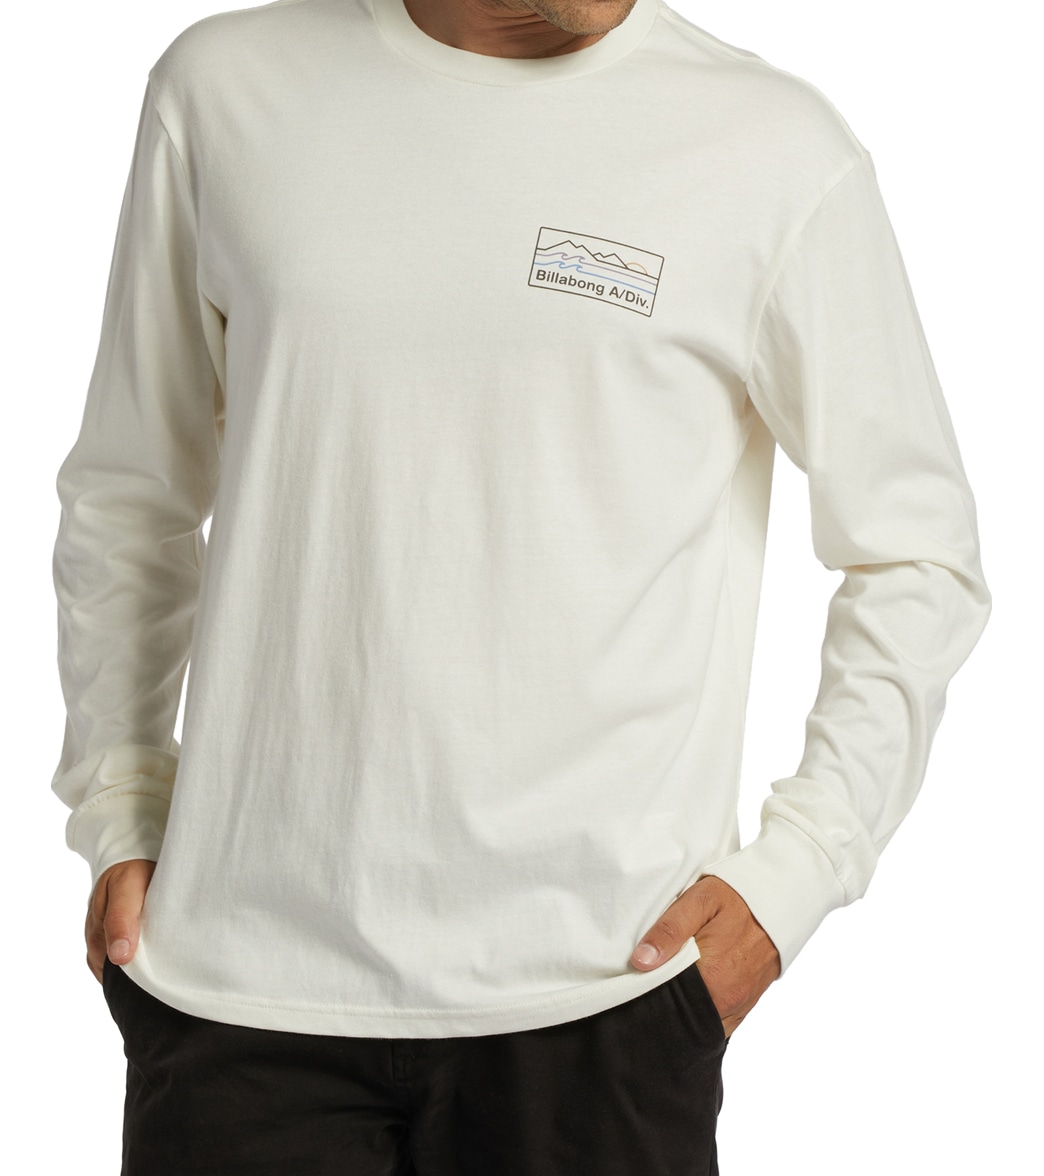 Billabong Men's Range Long Sleeve Tee Shirt - Off White Large Cotton - Swimoutlet.com